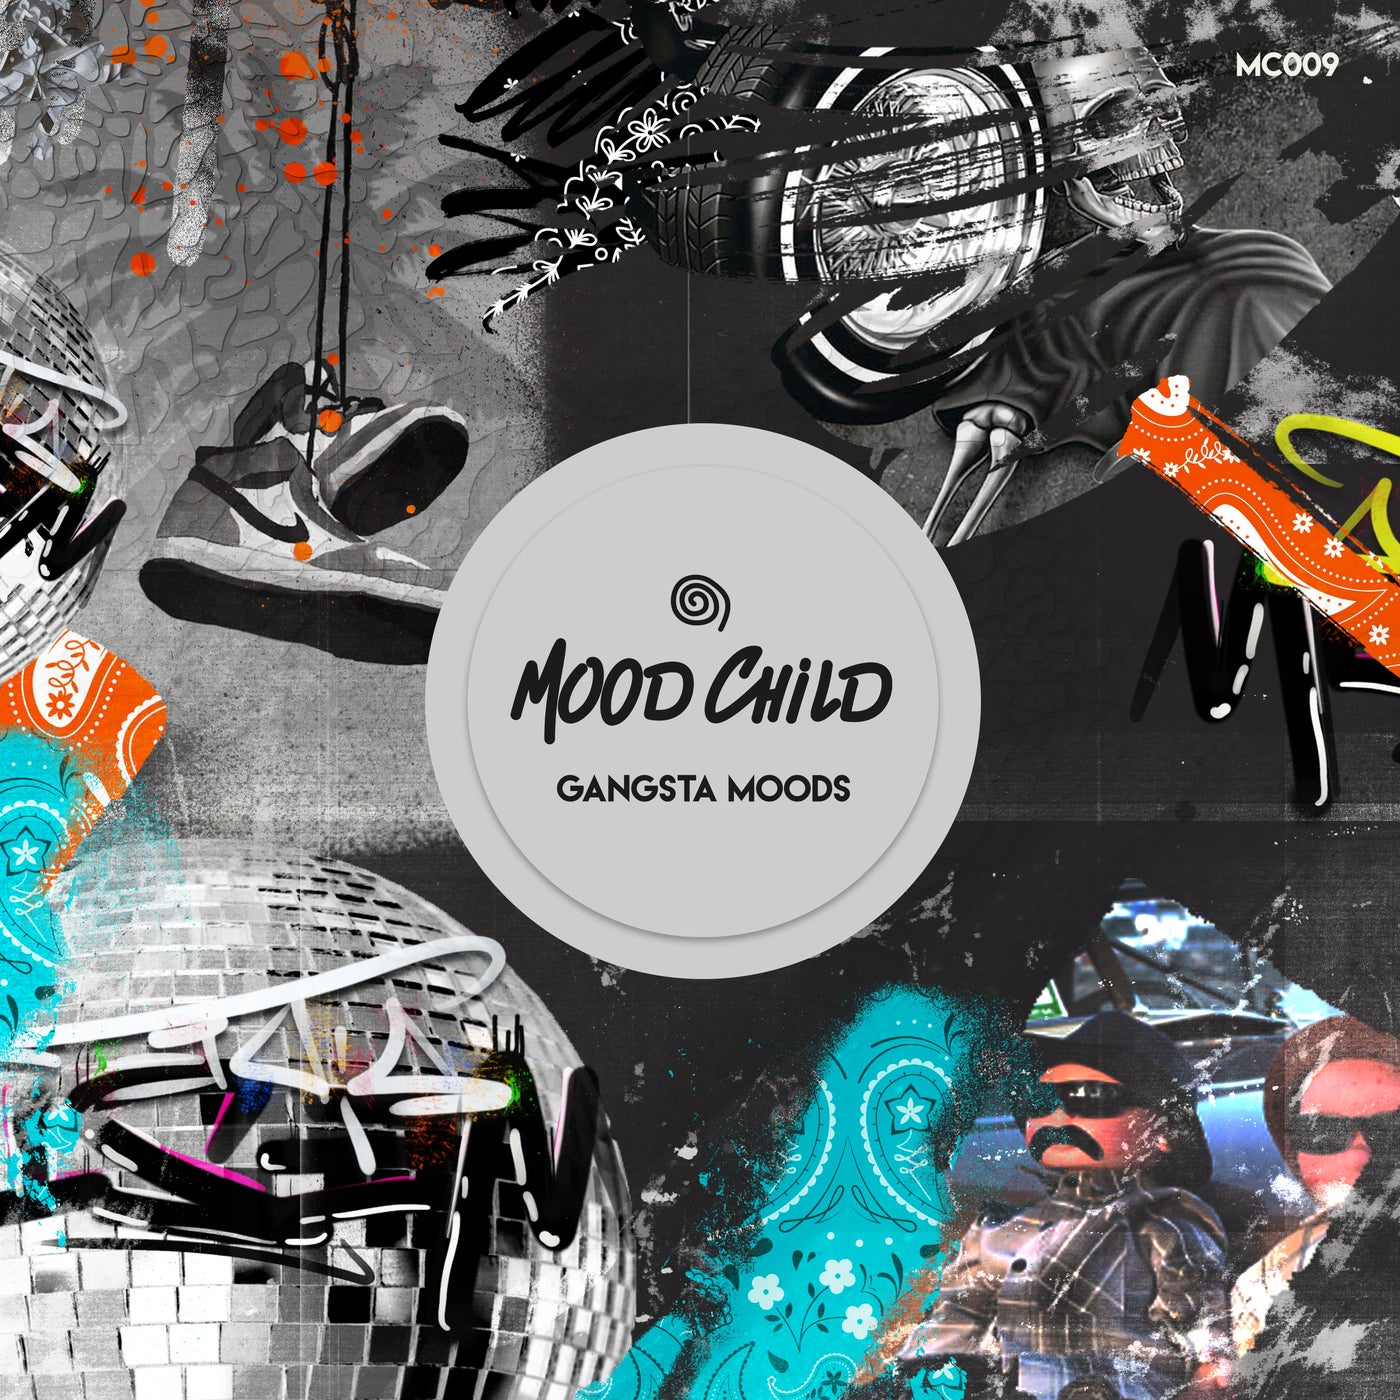 image cover: Sirus Hood, Gui Wittckind - Gangsta Moods on Mood Child